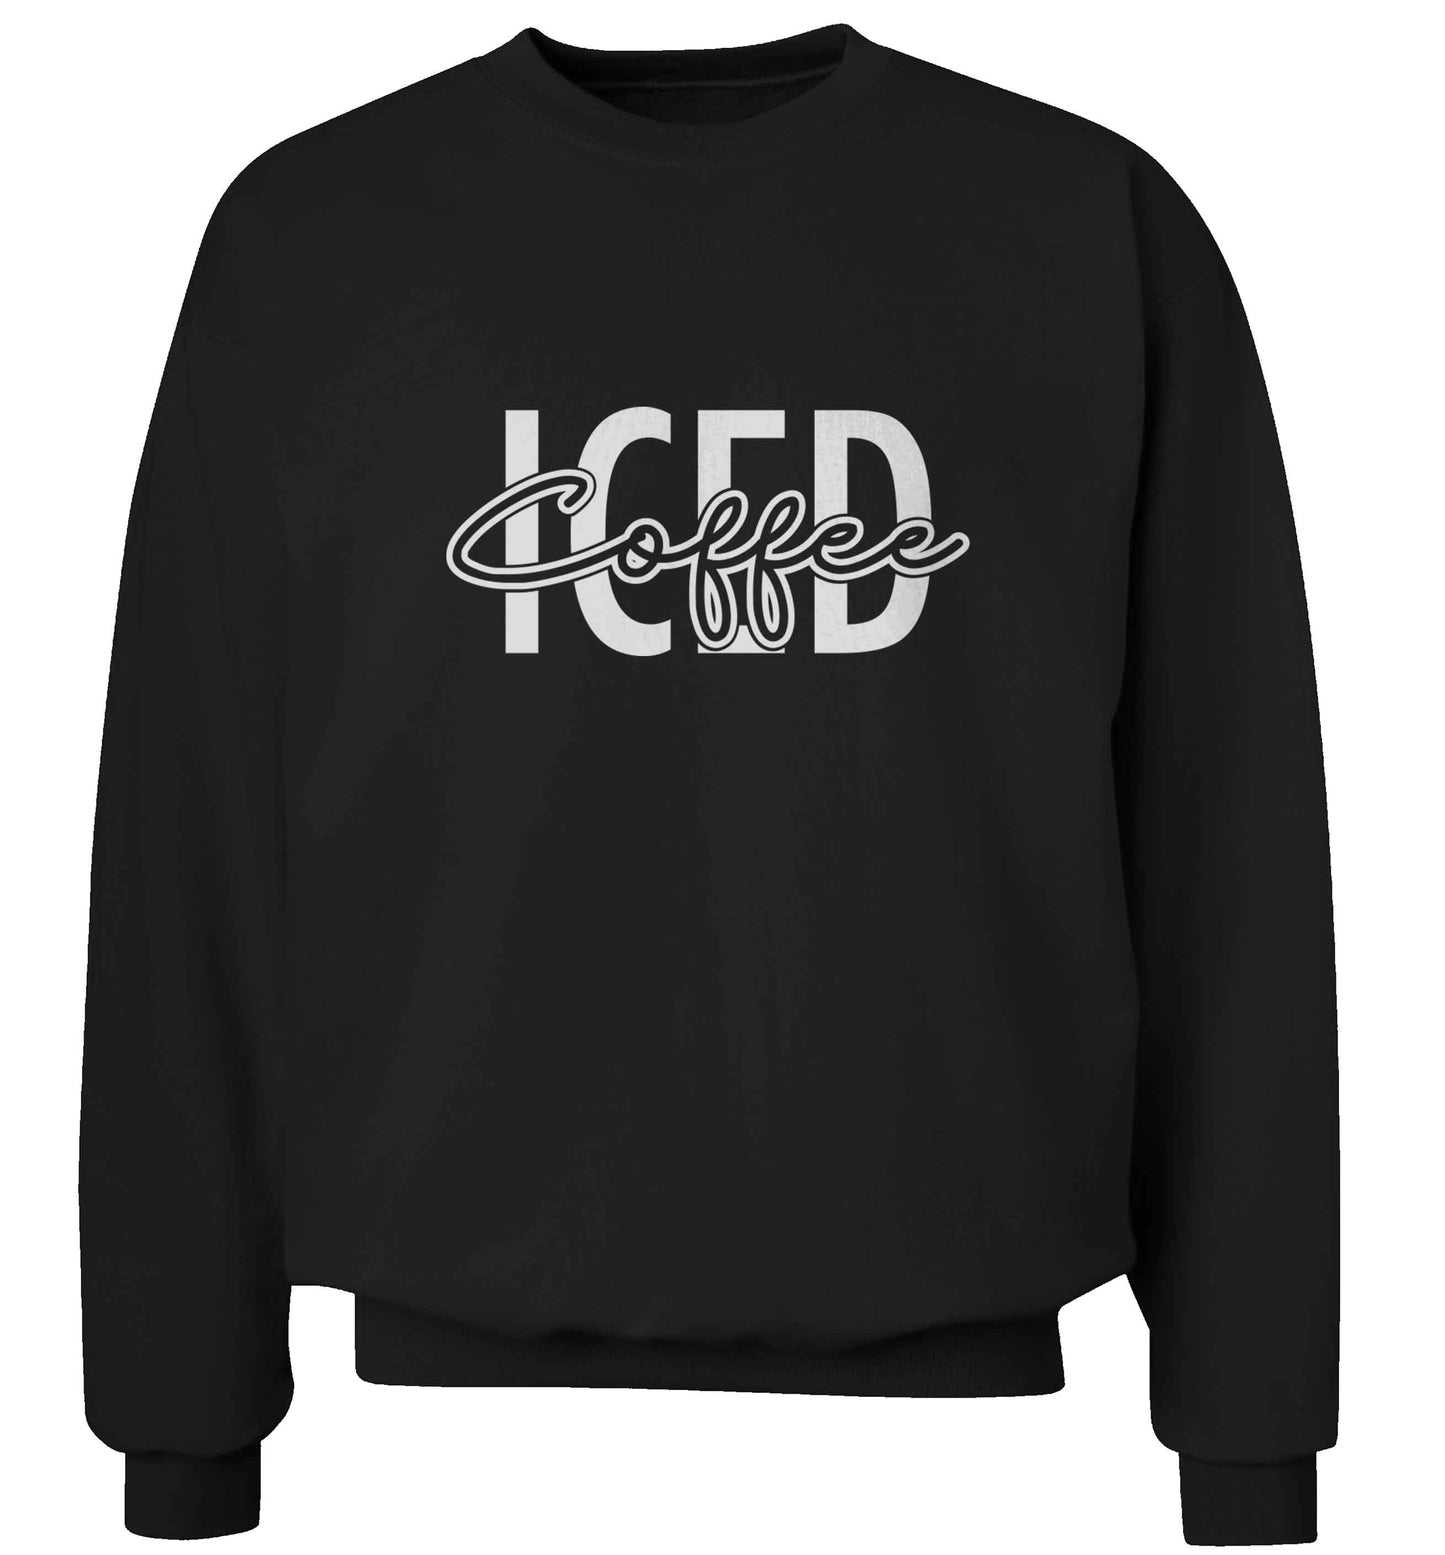 Iced Coffee adult's unisex black sweater 2XL